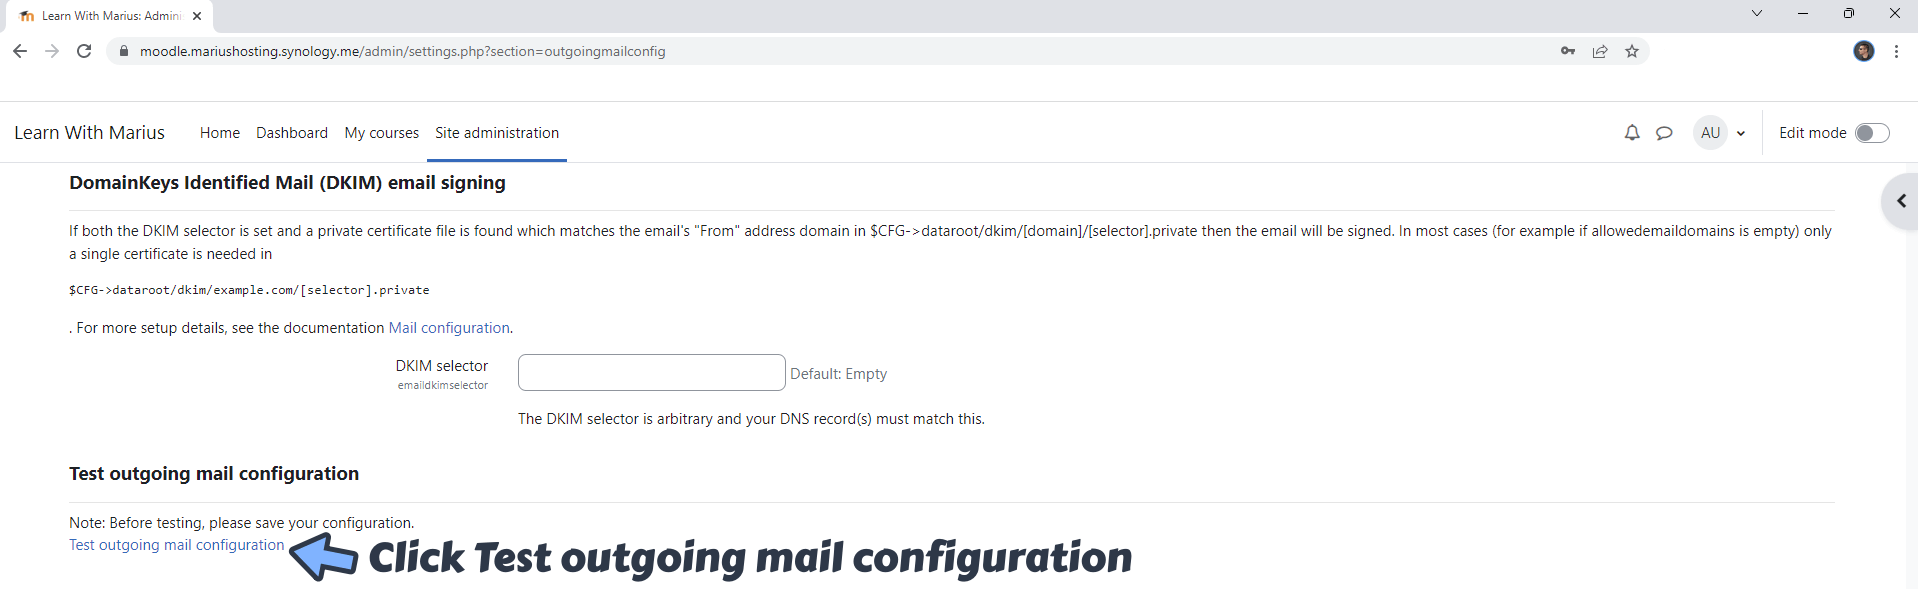 Synology Moodle Docker Email Configuration 4